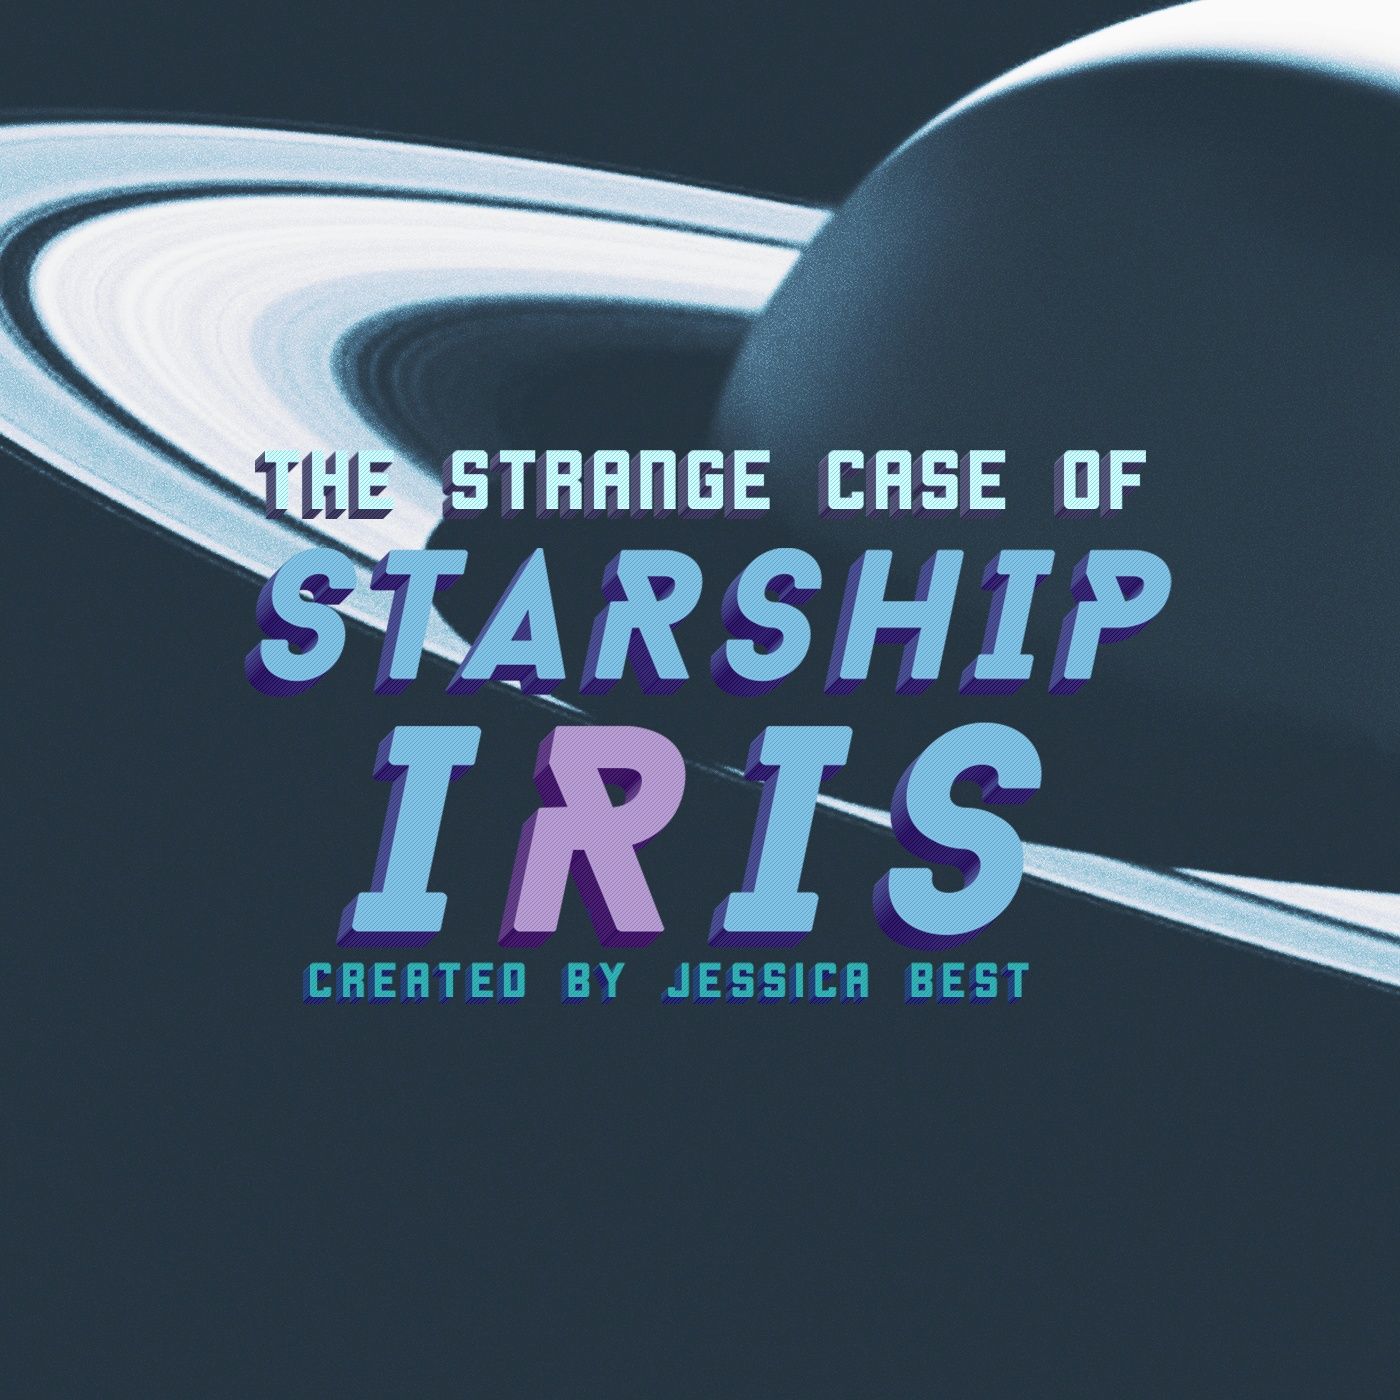 "The Strange Case of Starship Iris" Podcast